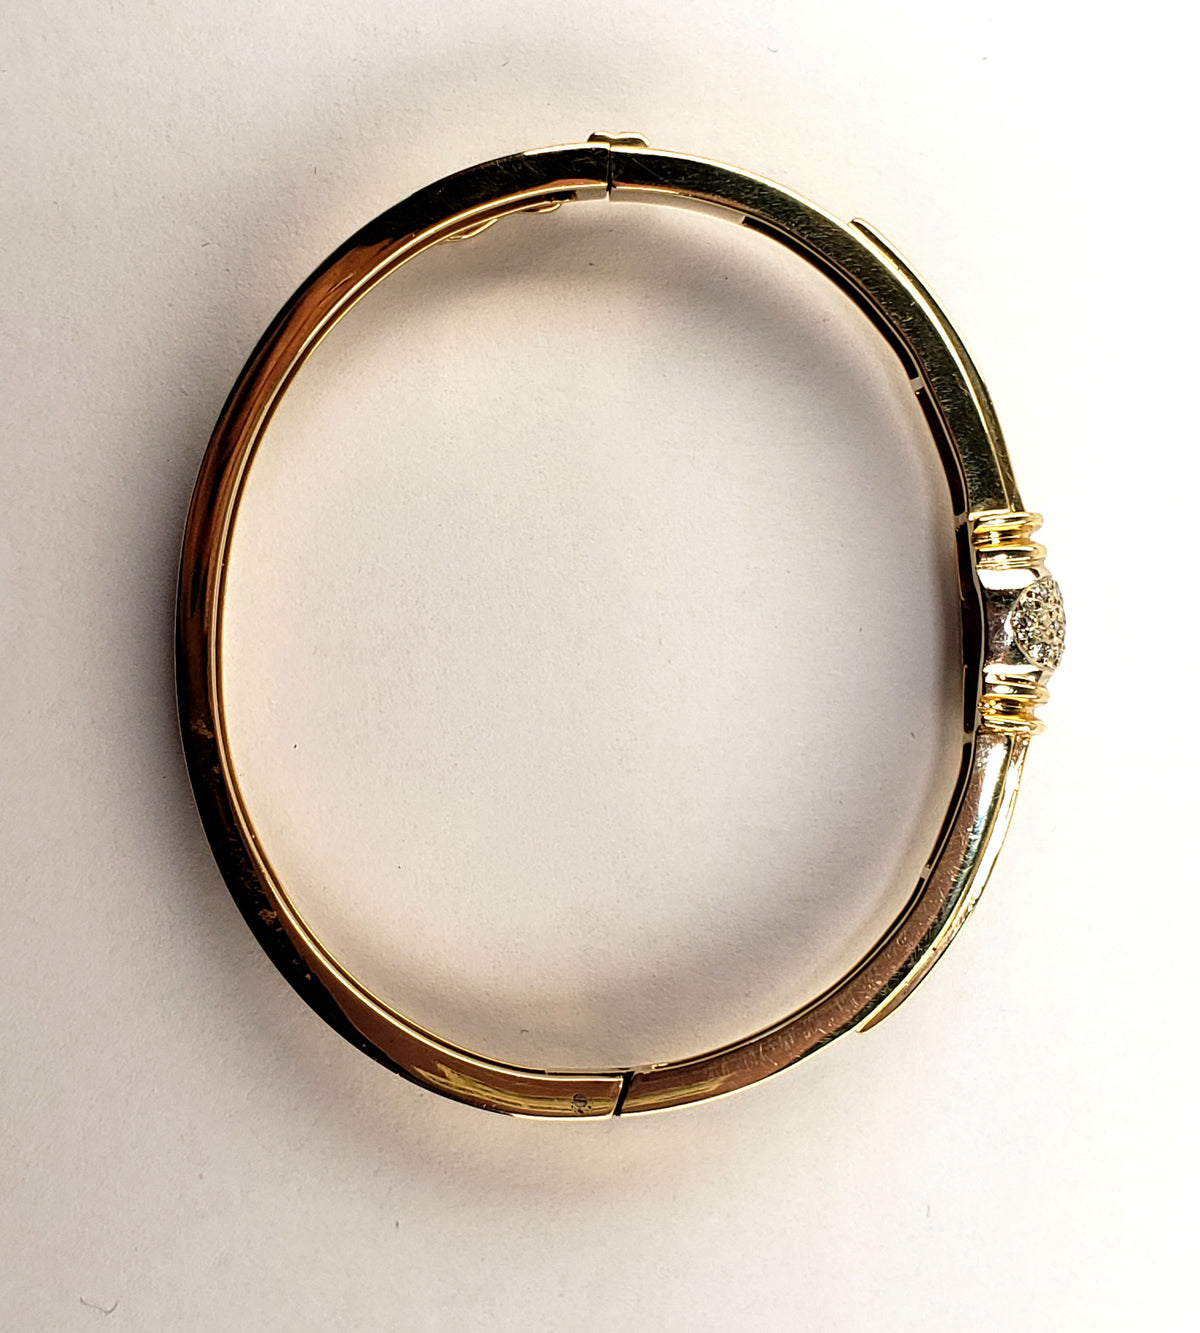 Diamond Pave RBC and Channel set Princess Cut Bangle Bracelet made in 14-Karat Yellow Gold